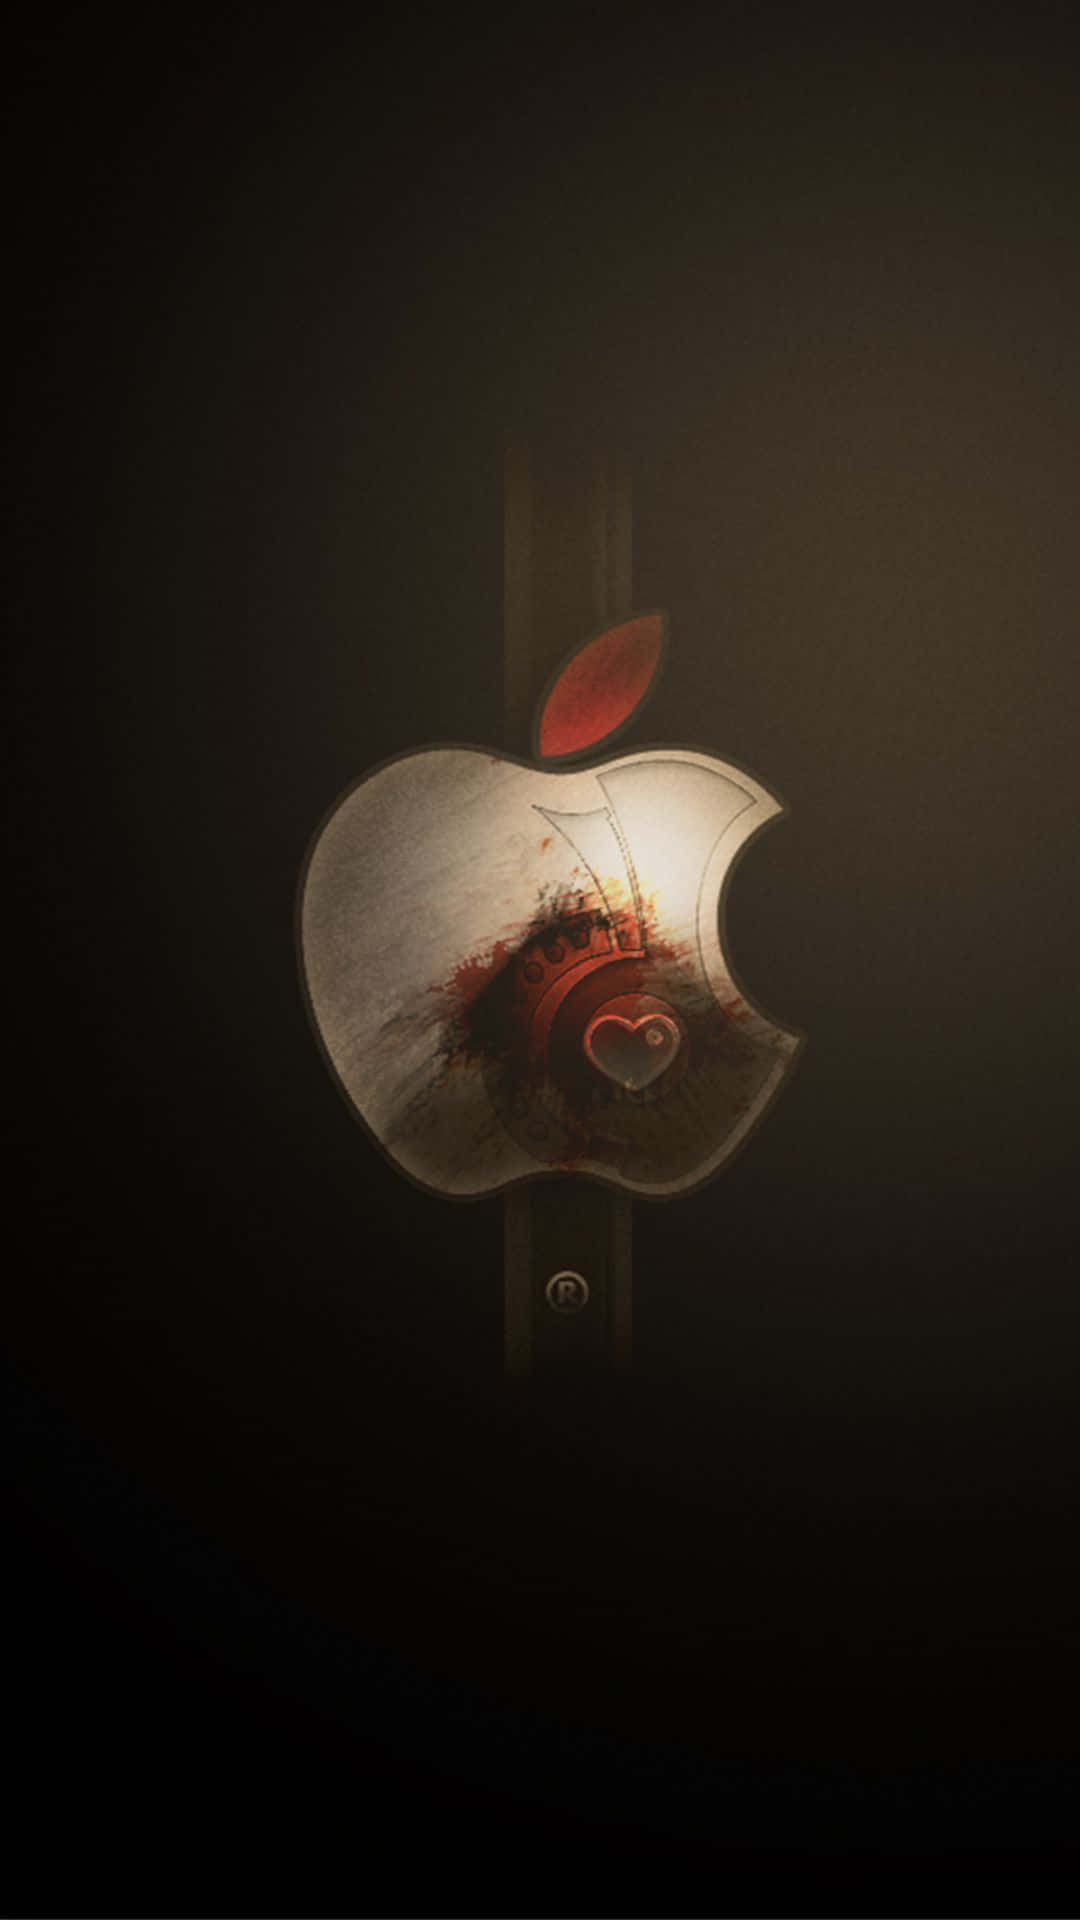 Iphonex Logotipo De Apple Mejorado. Fondo de pantalla